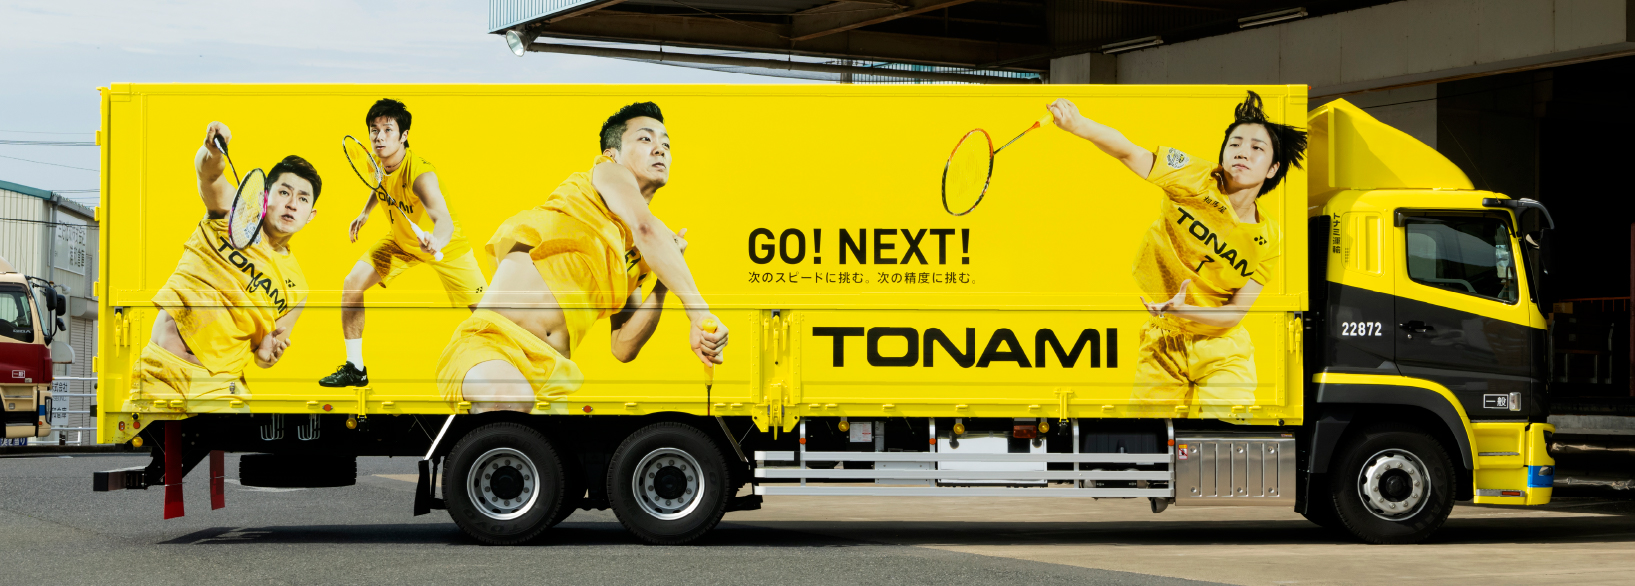 HALO | WORK__トナミ運輸 GO NEXT! tonami-ポスター14